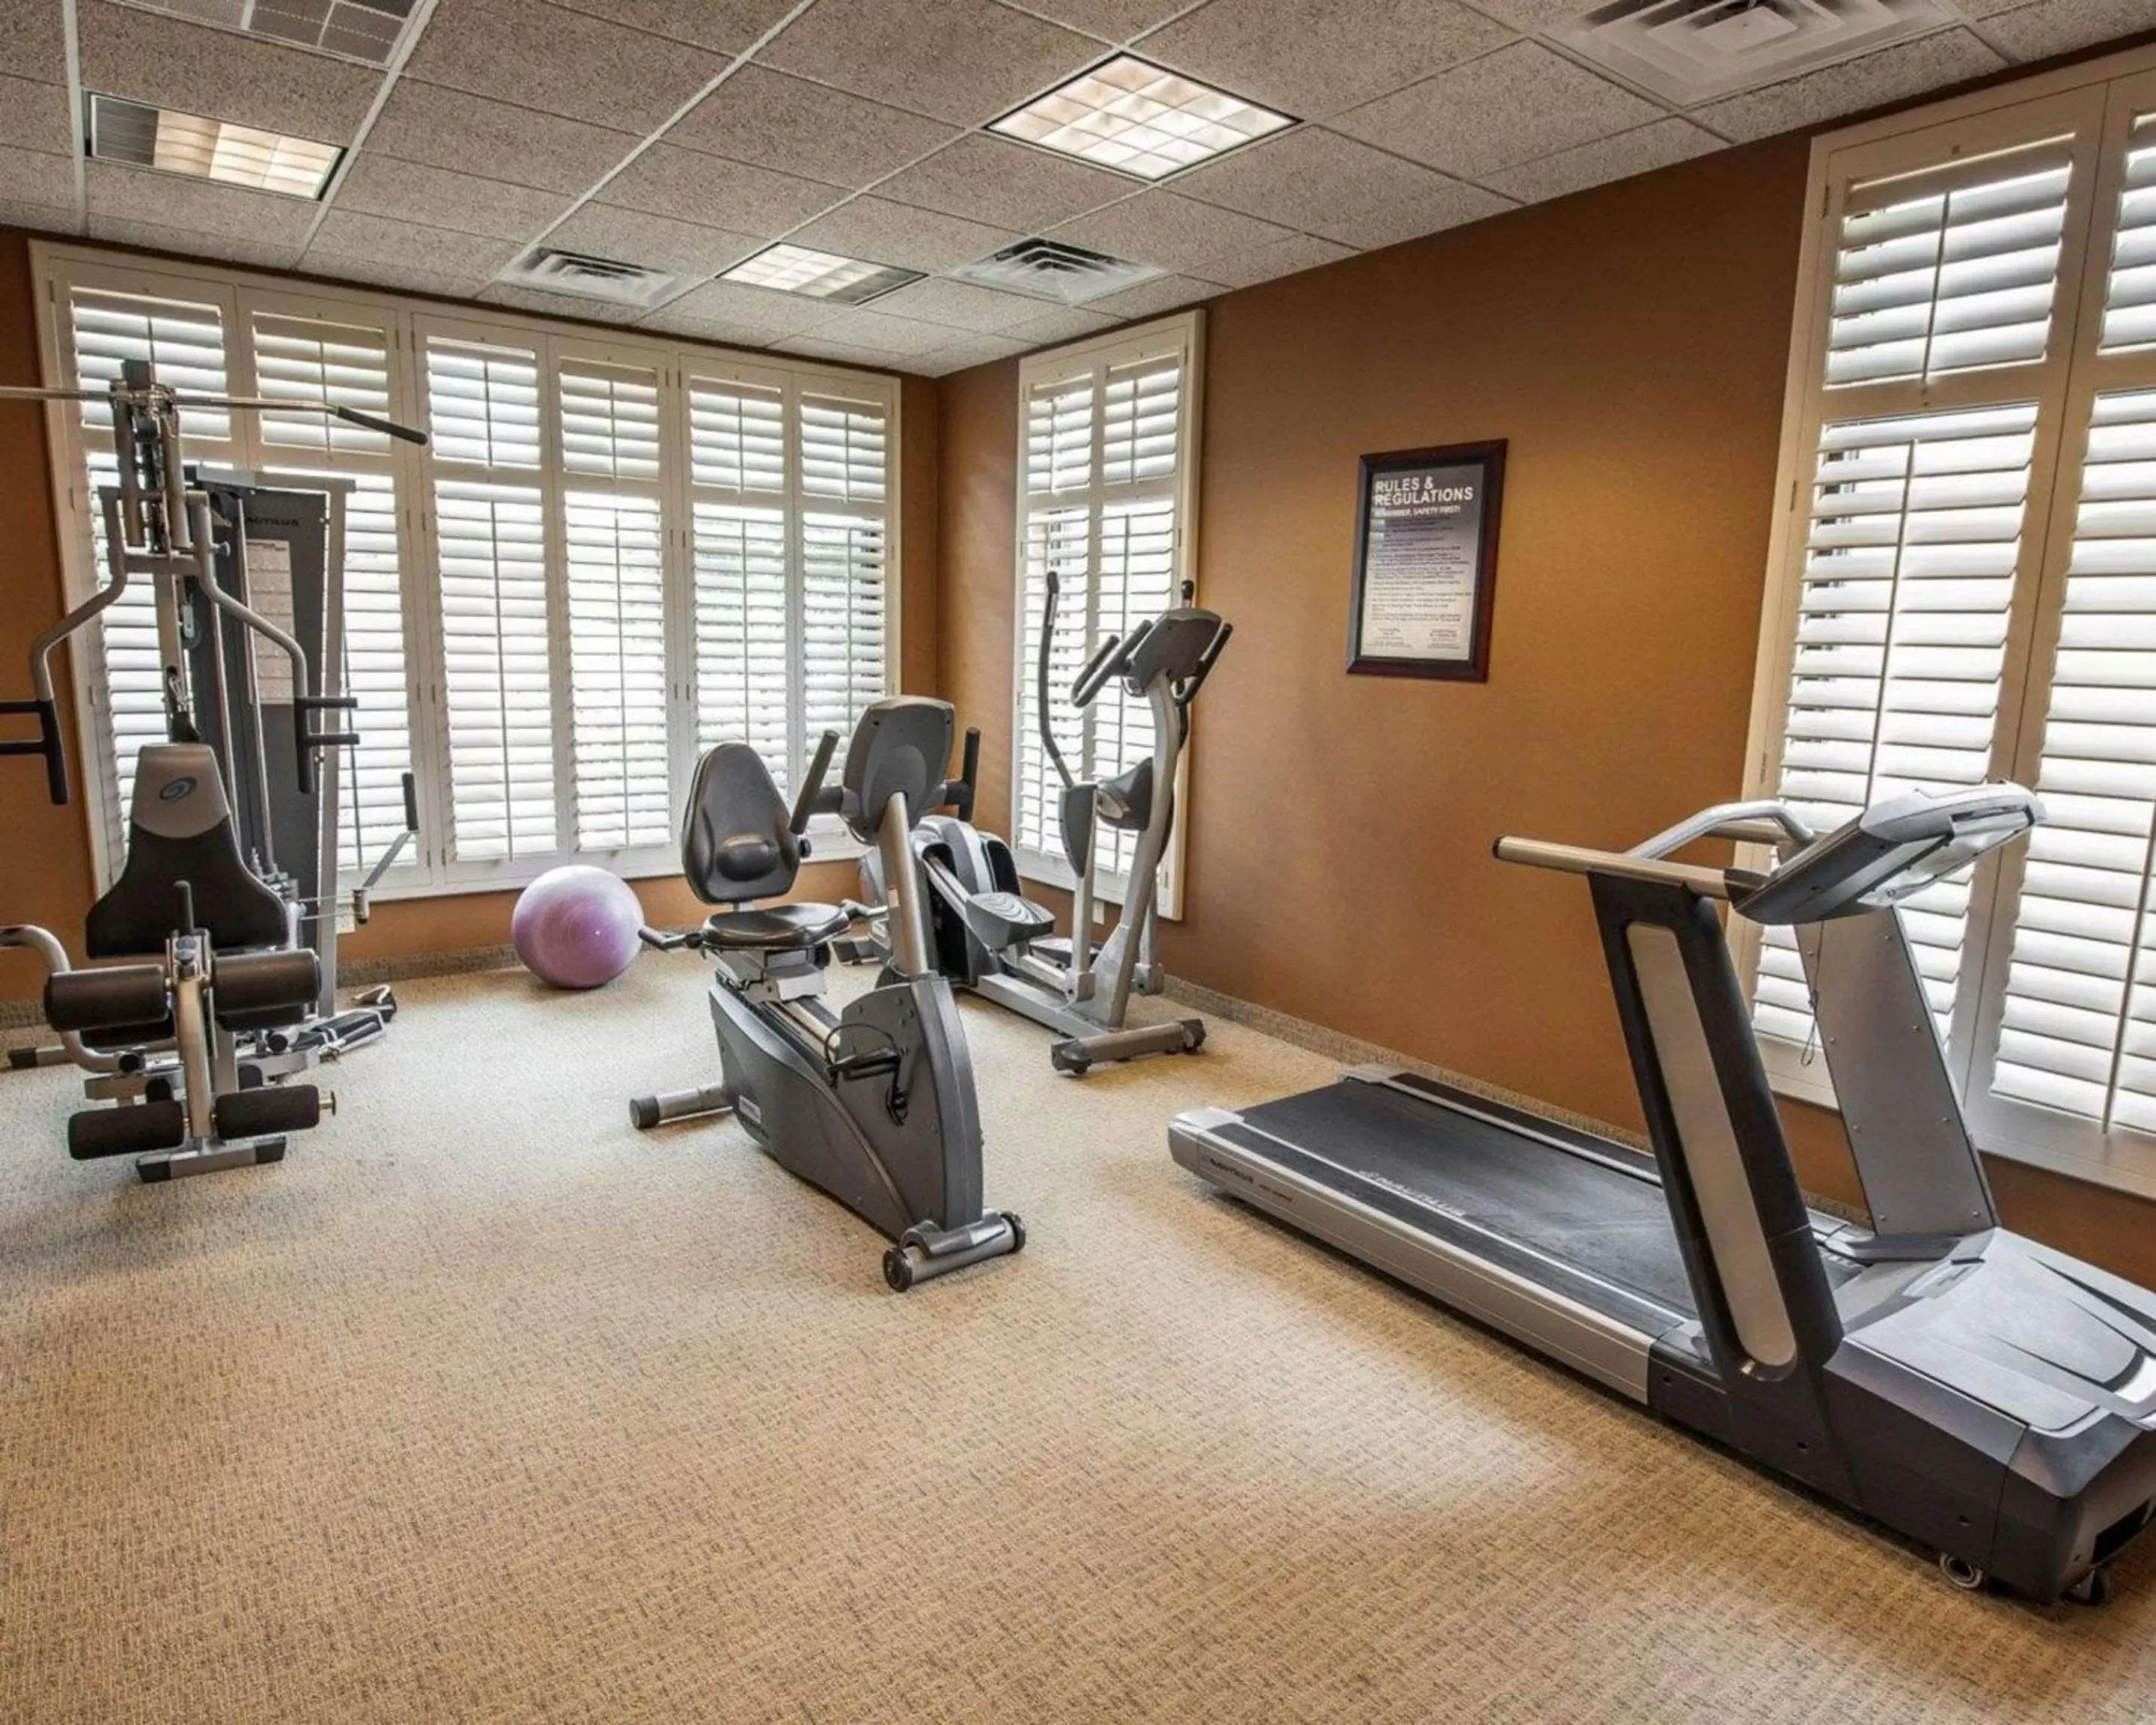 Fitness centre/facilities, Fitness Center/Facilities in Comfort Inn Bloomington near University